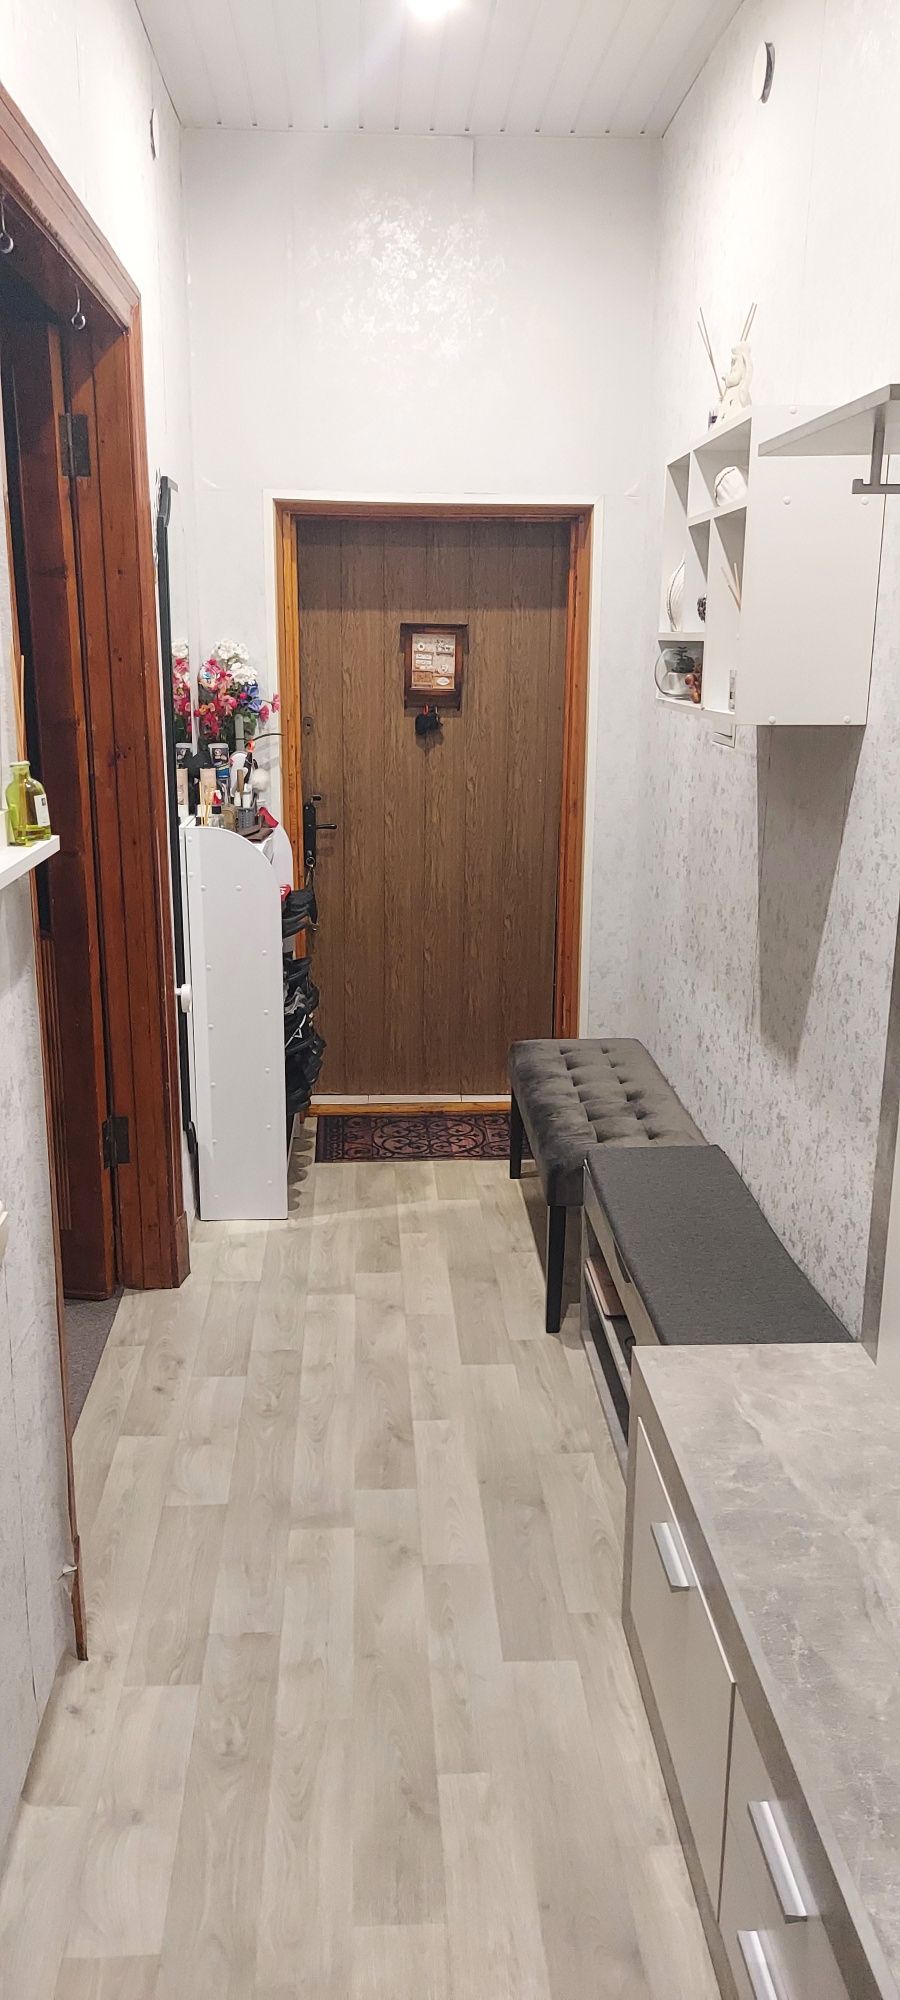 Продам 2-х комнатную квартиру в Заводском районе